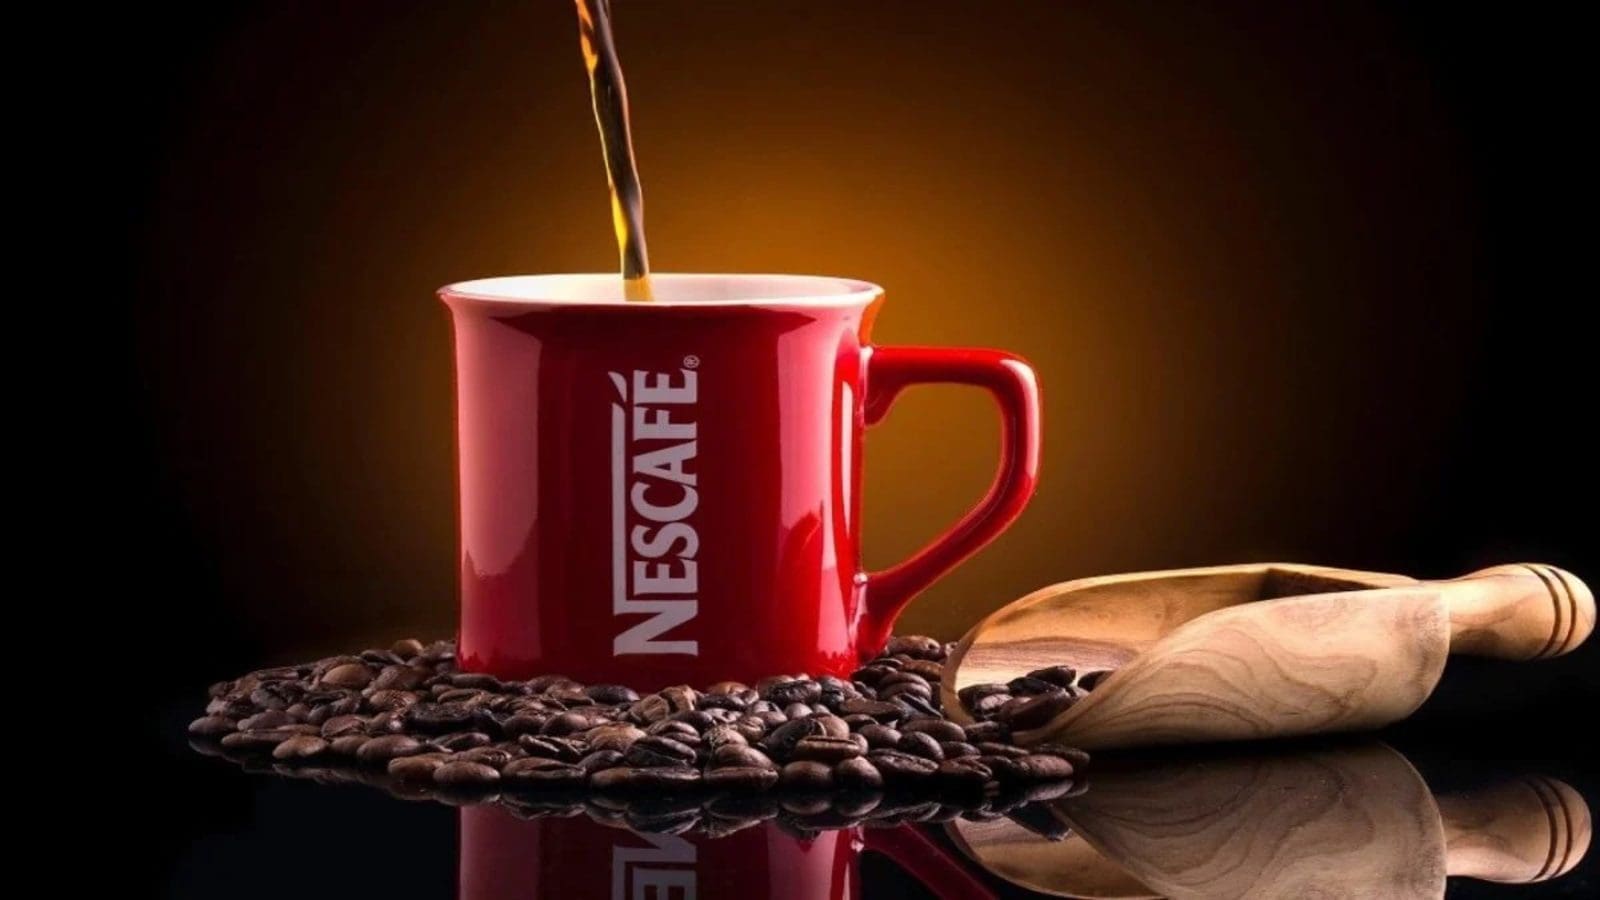 Nestlé opens new US$340M Nescafé coffee factory in Mexico